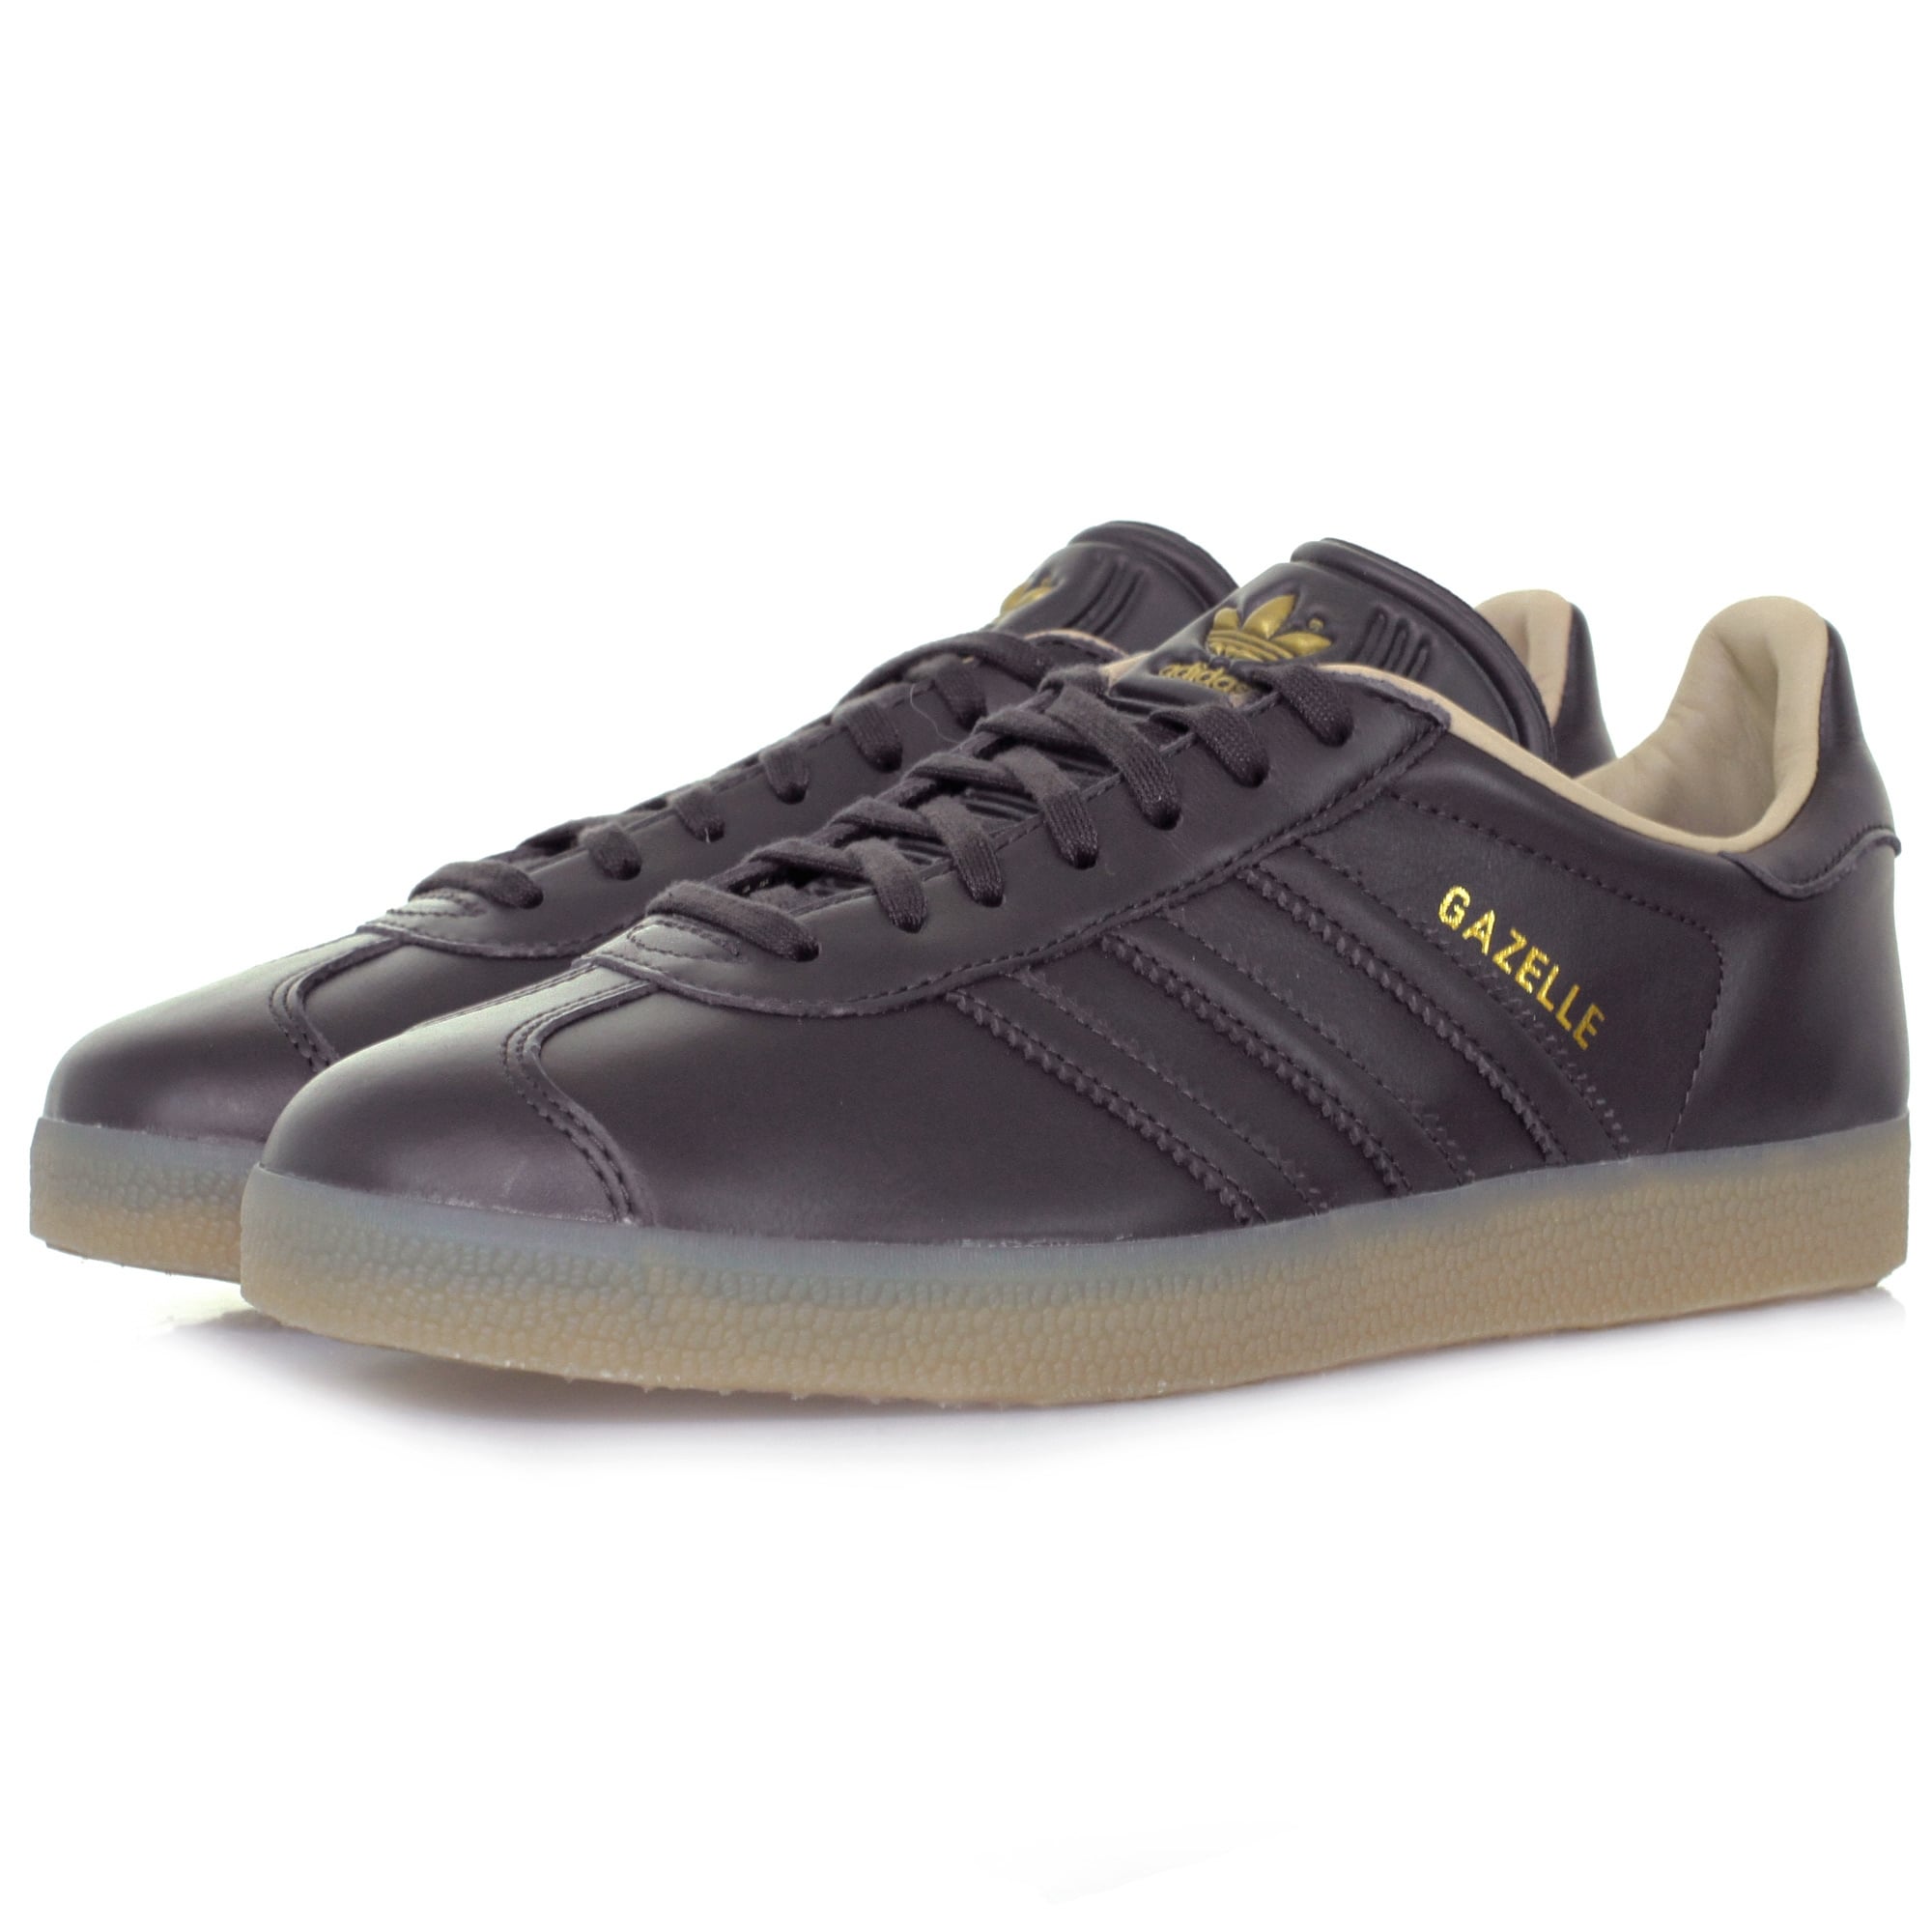 Adidas Gazelle Sneakers | Dark Grey Leather Shoe